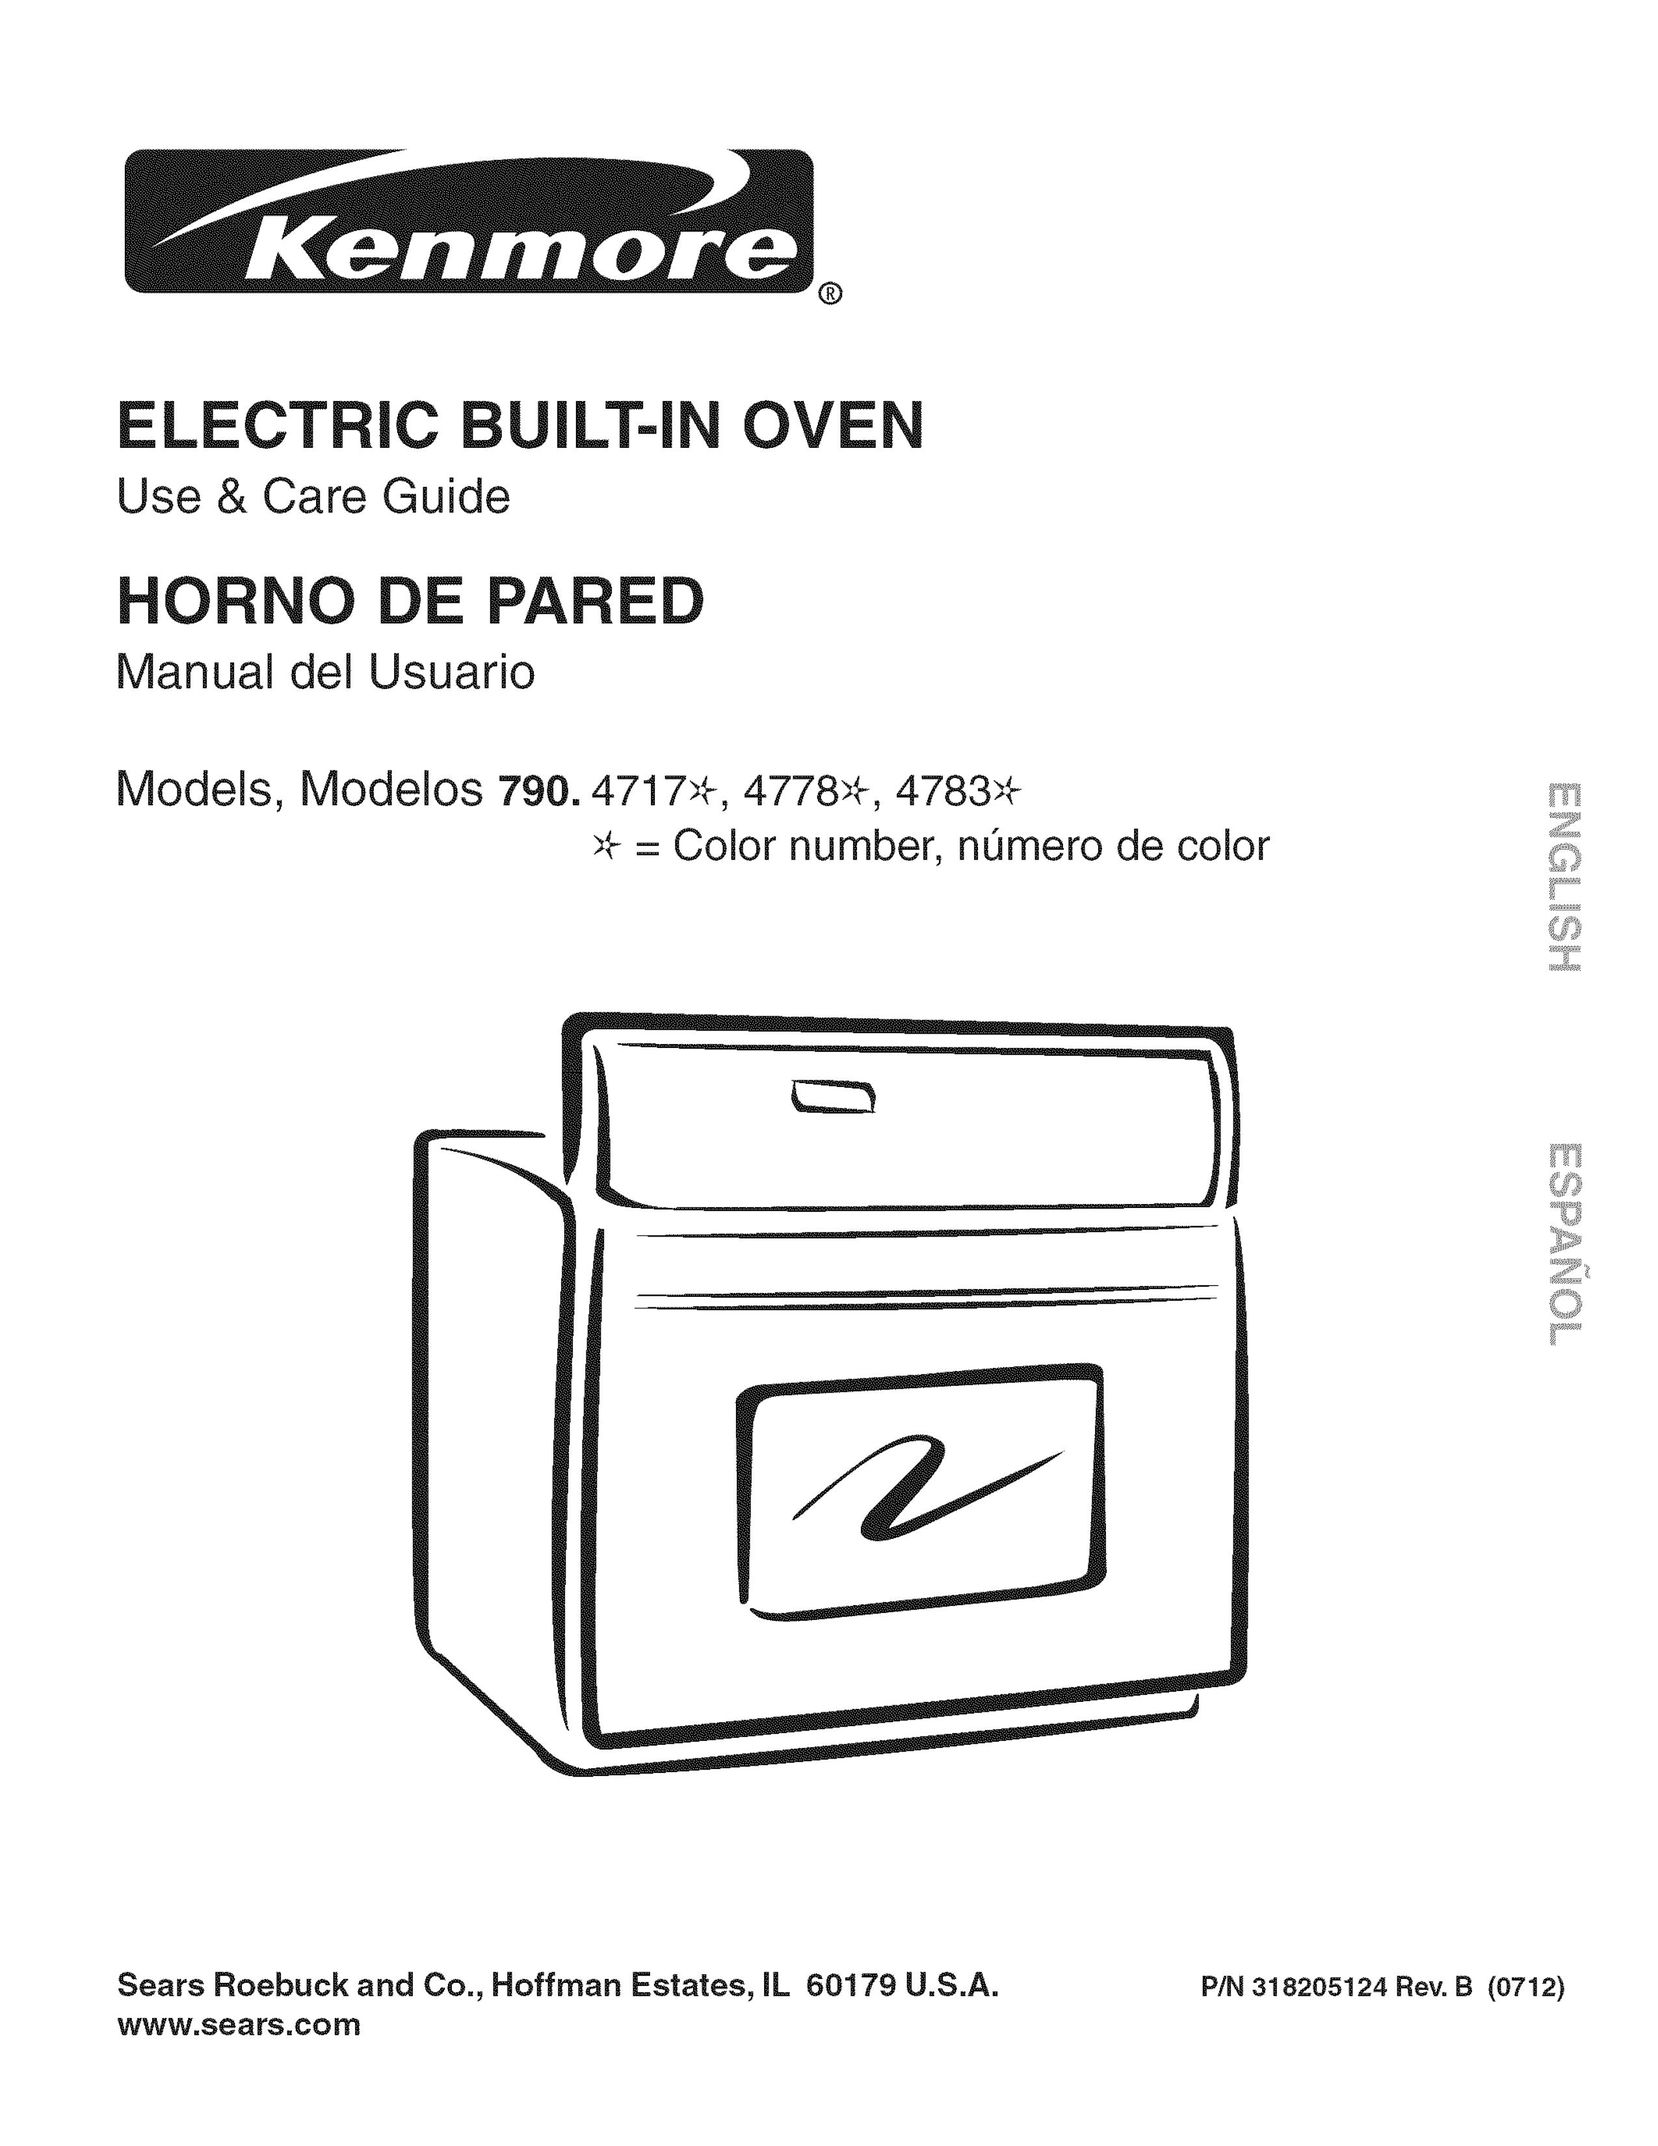 Kenmore 790.4778 Oven User Manual